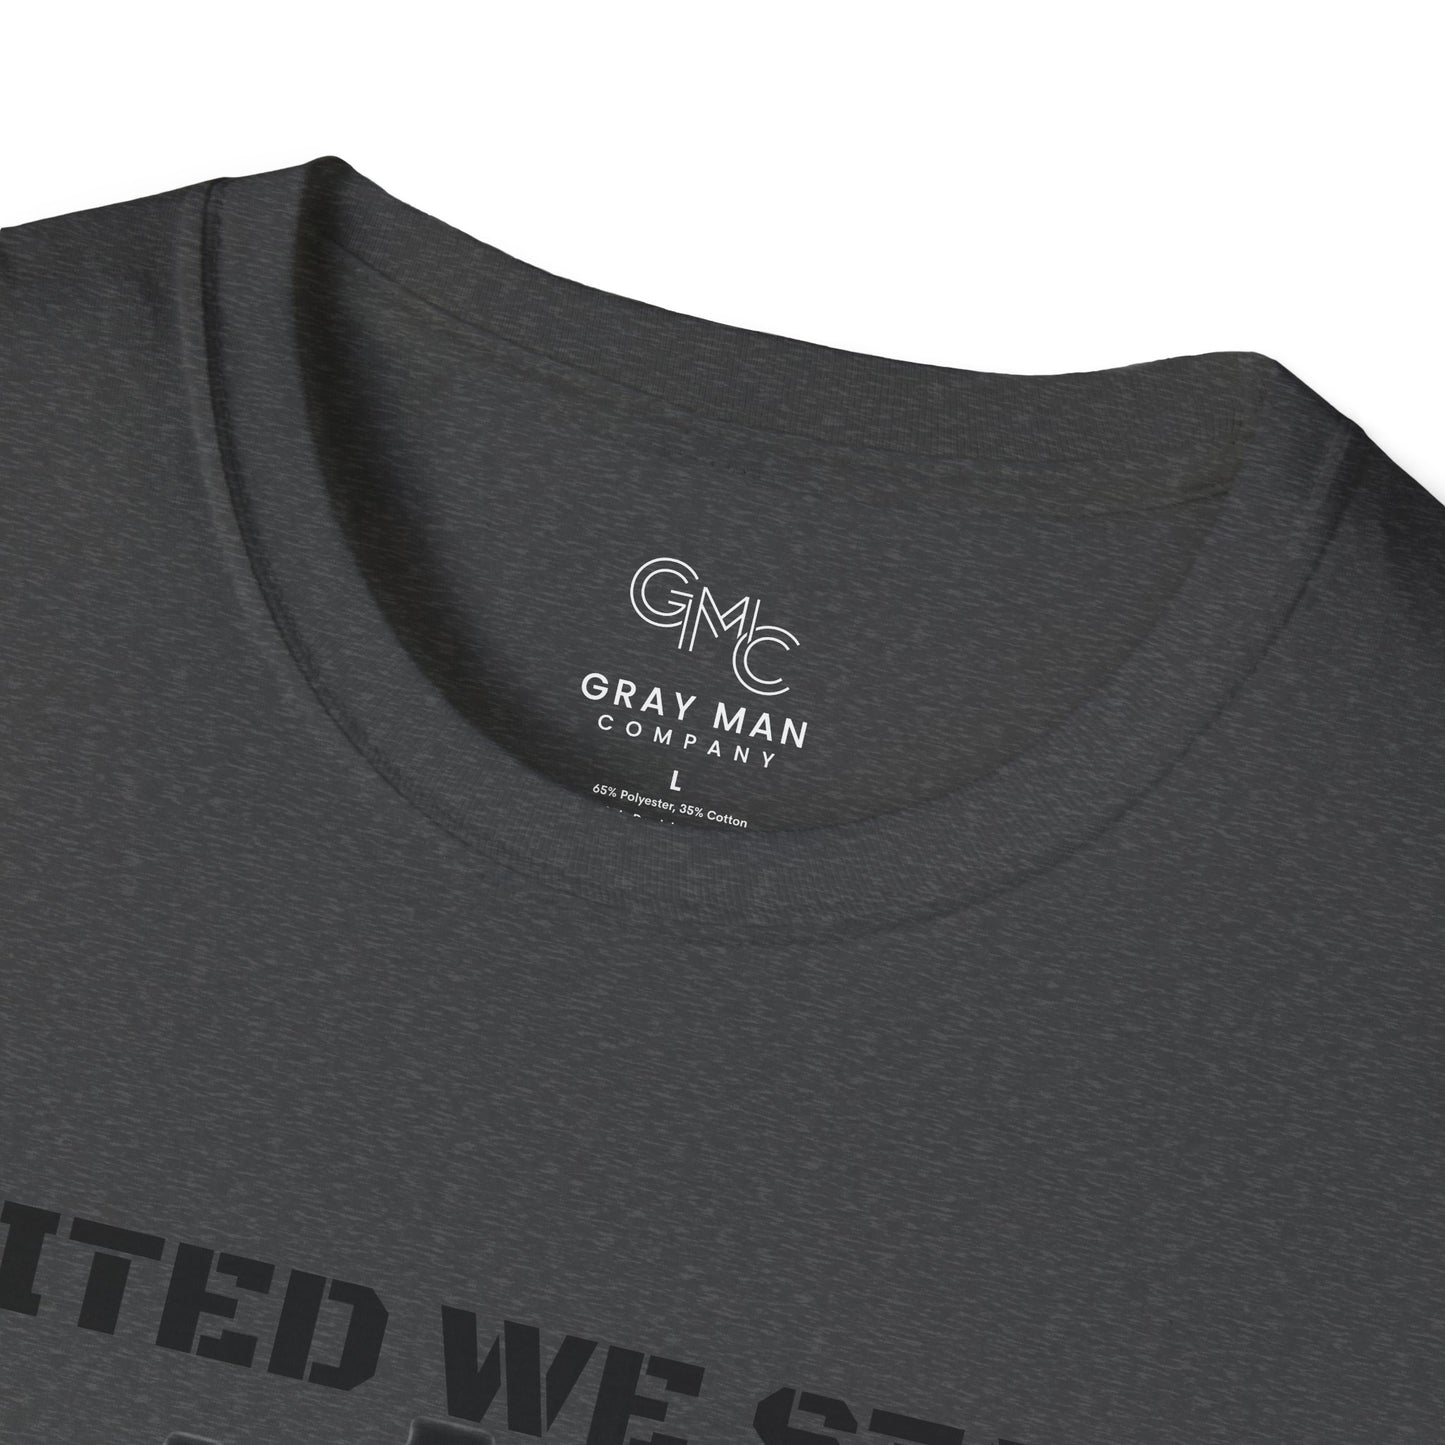 EDC Logo T-Shirt - UNITED WE STAND, UNARMED WE FALL